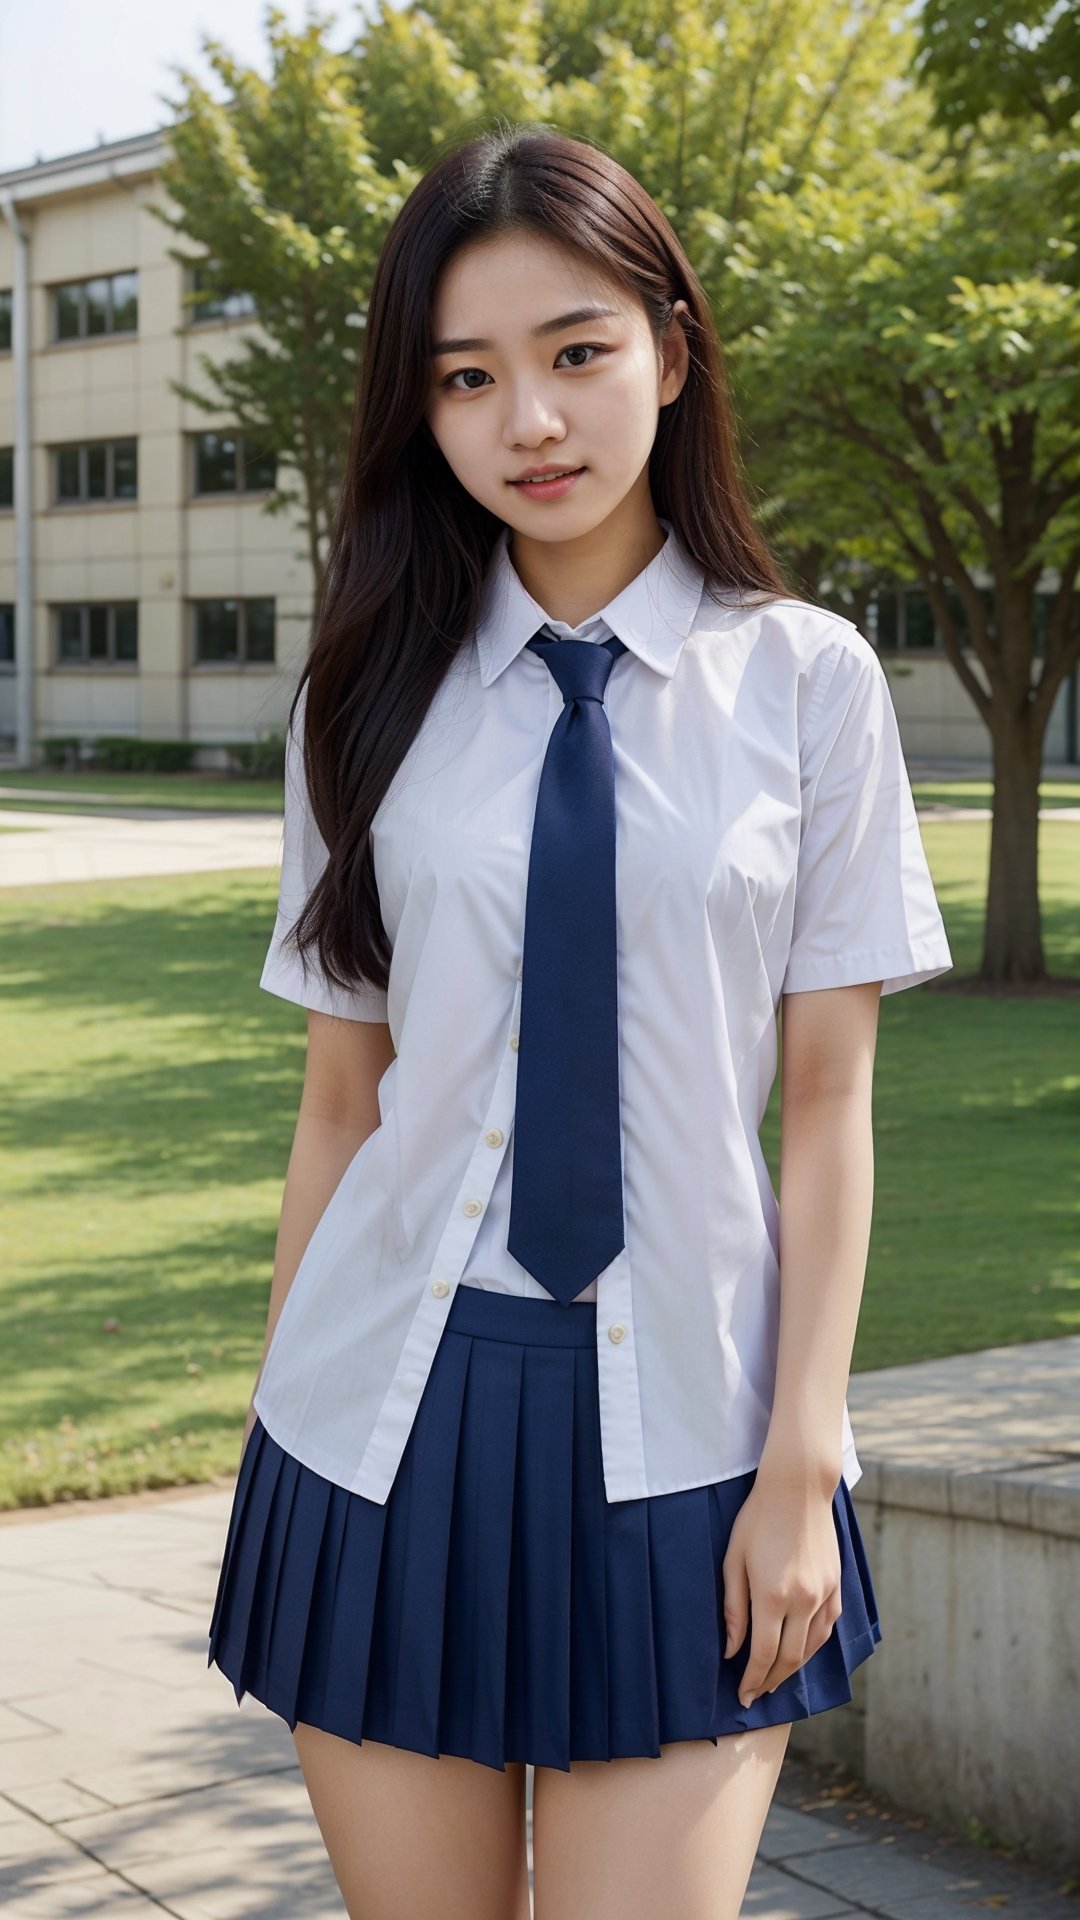 school uniform,
korean university student,
goddess,
21 years old